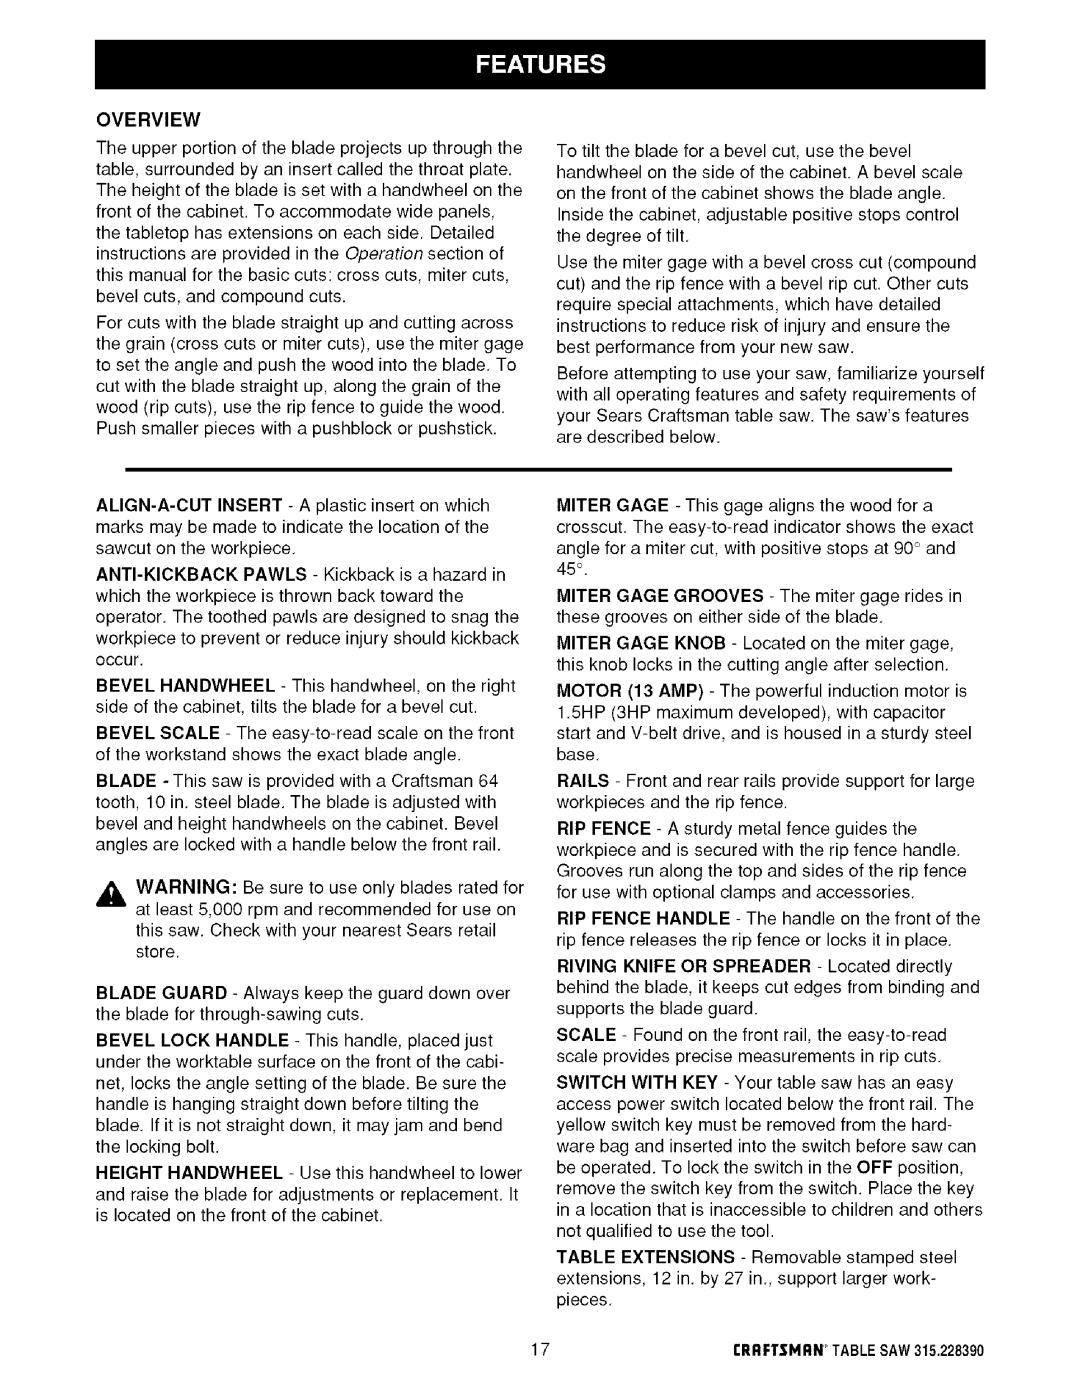 Craftsman 315.22839 owner manual Overview 